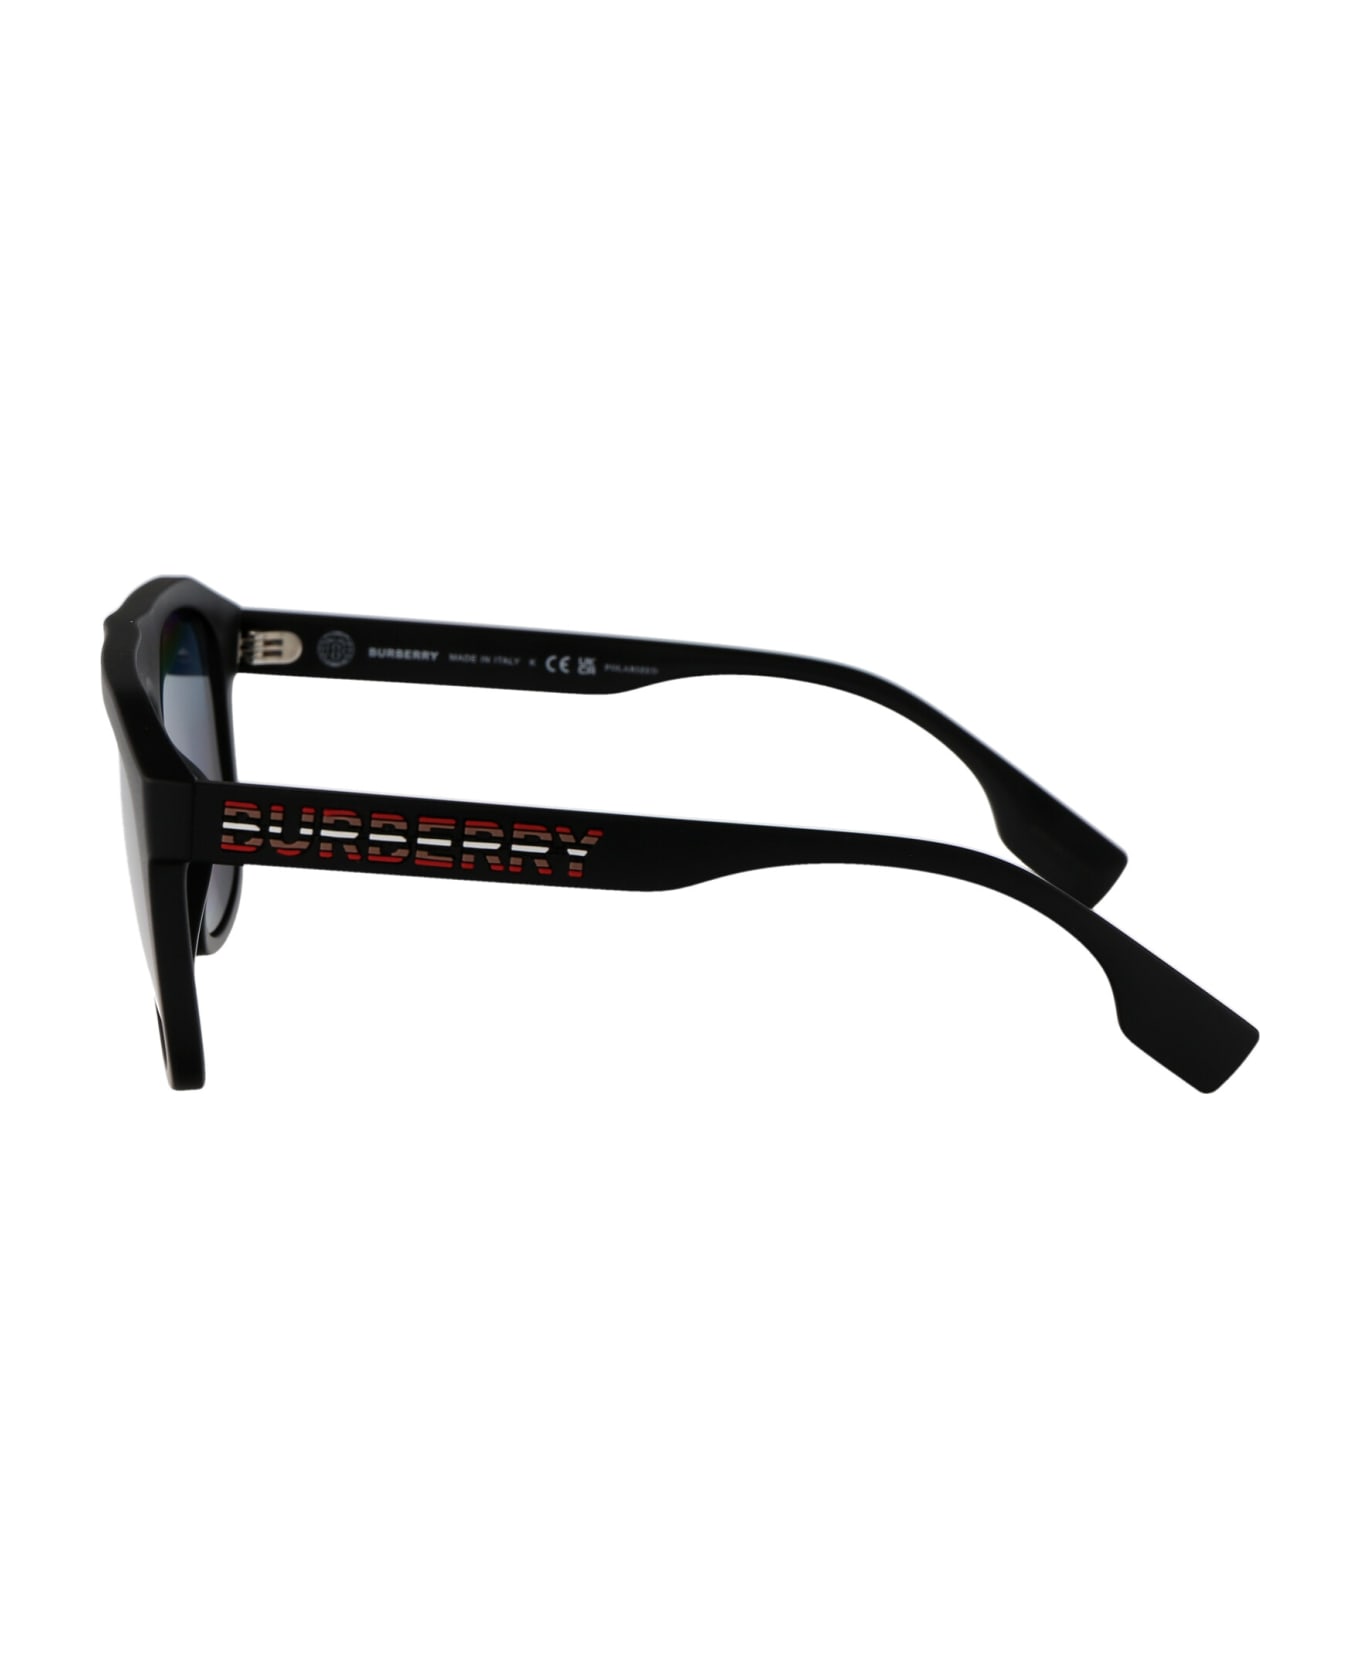 Burberry Eyewear Wren Sunglasses - 346481 Matte Black